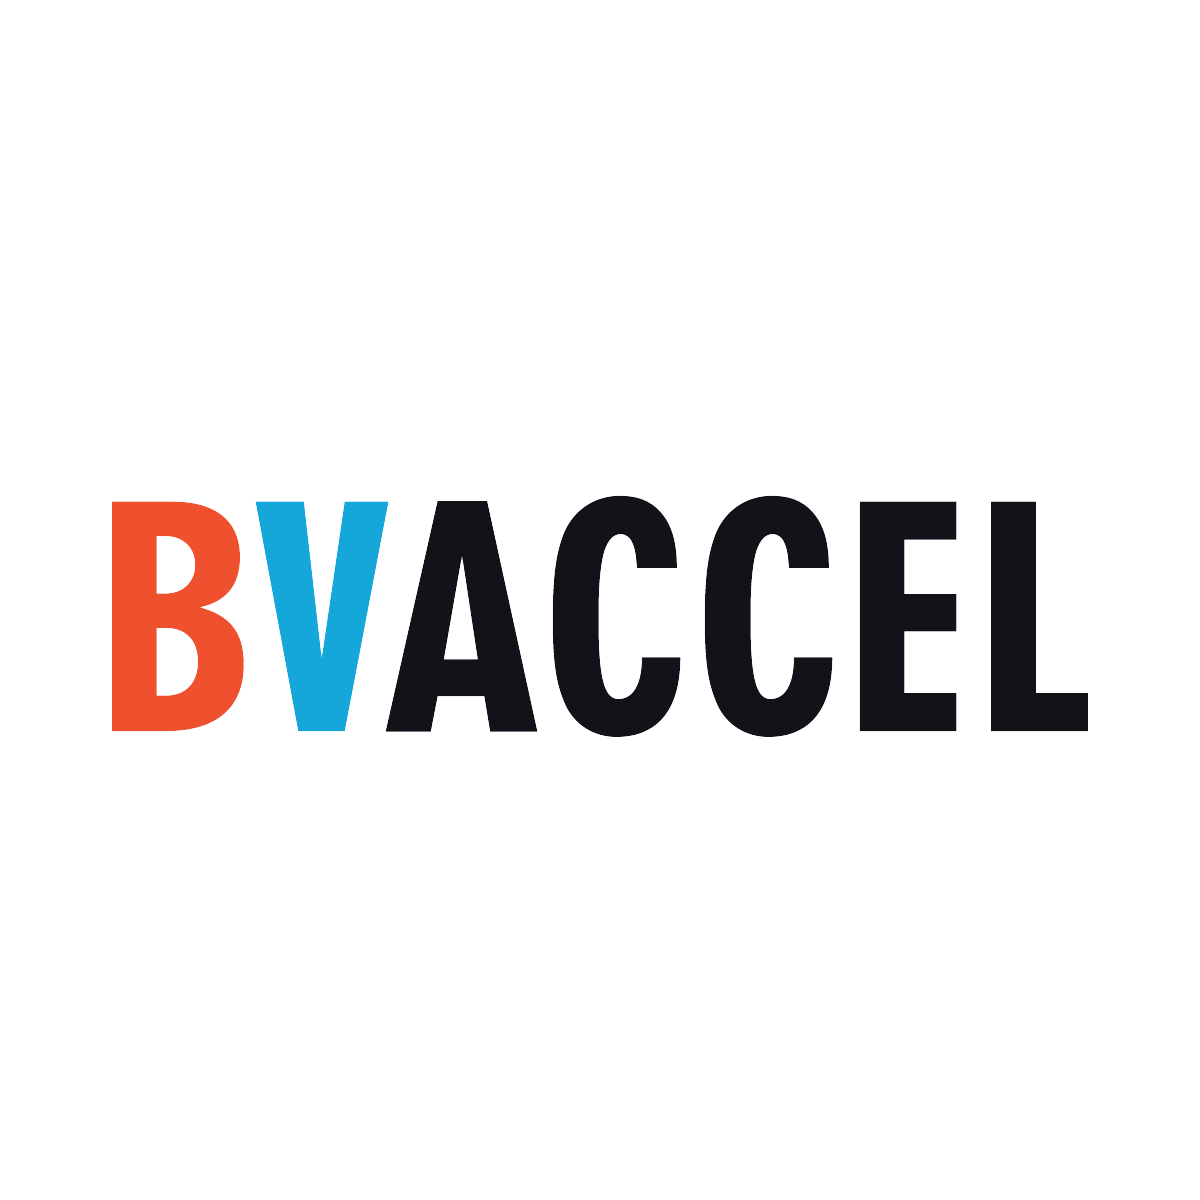 Bench Logo - Brand Value Accelerator - Join the BVA Bench!